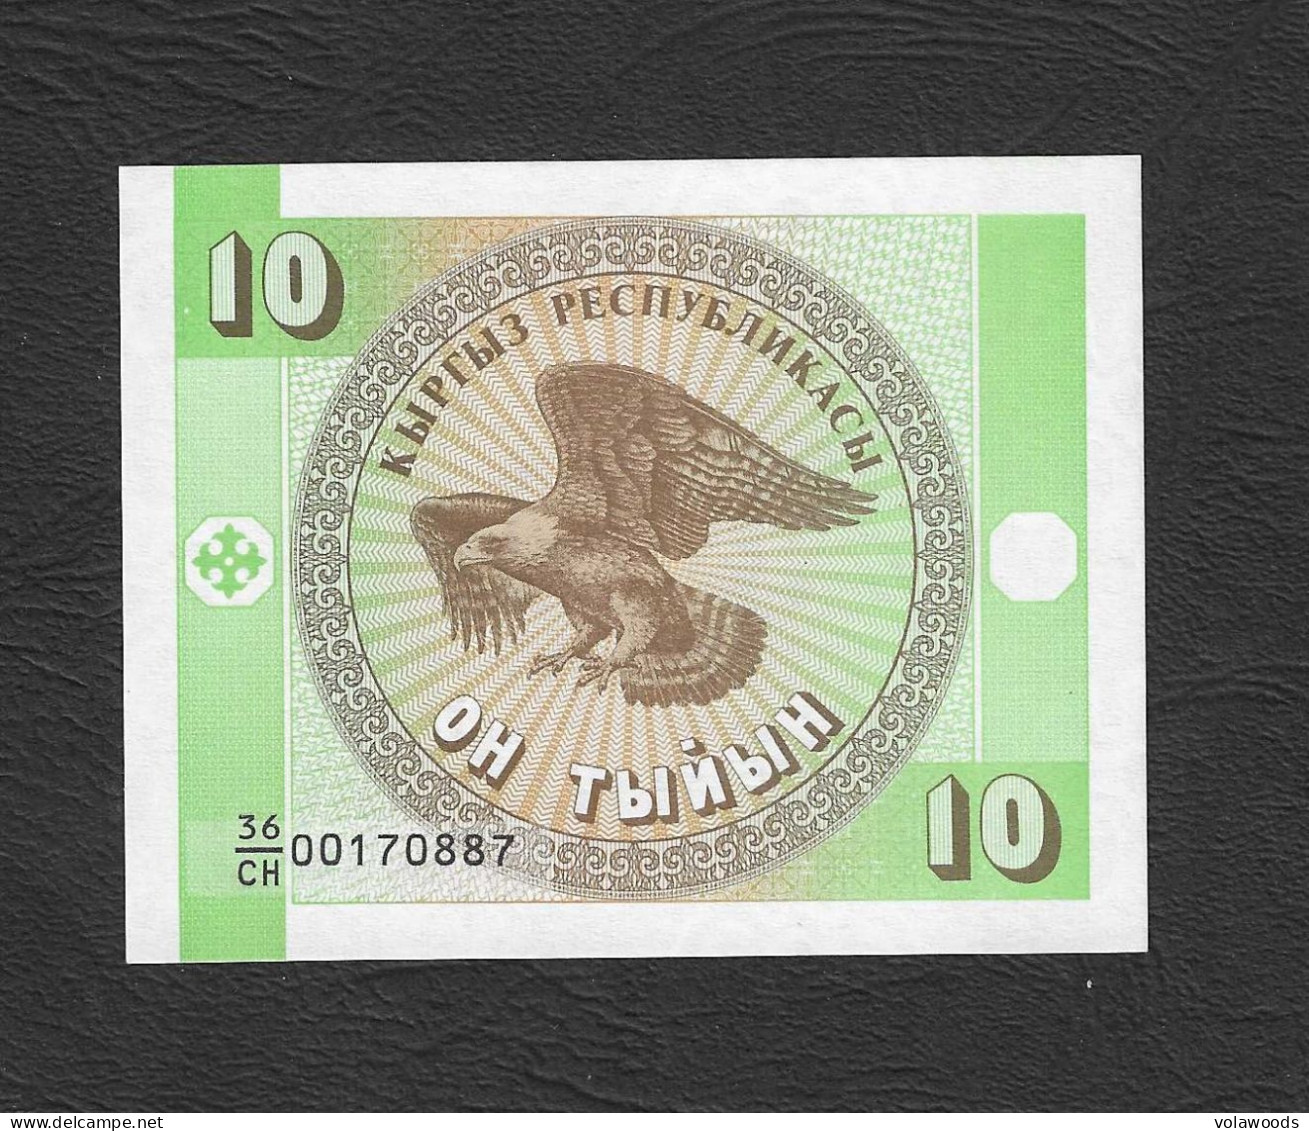 Kirghizistan - Banconota Non Circolata FdS UNC Da 10 Tyiyn P-2a - 1993 #19 - Kirghizistan